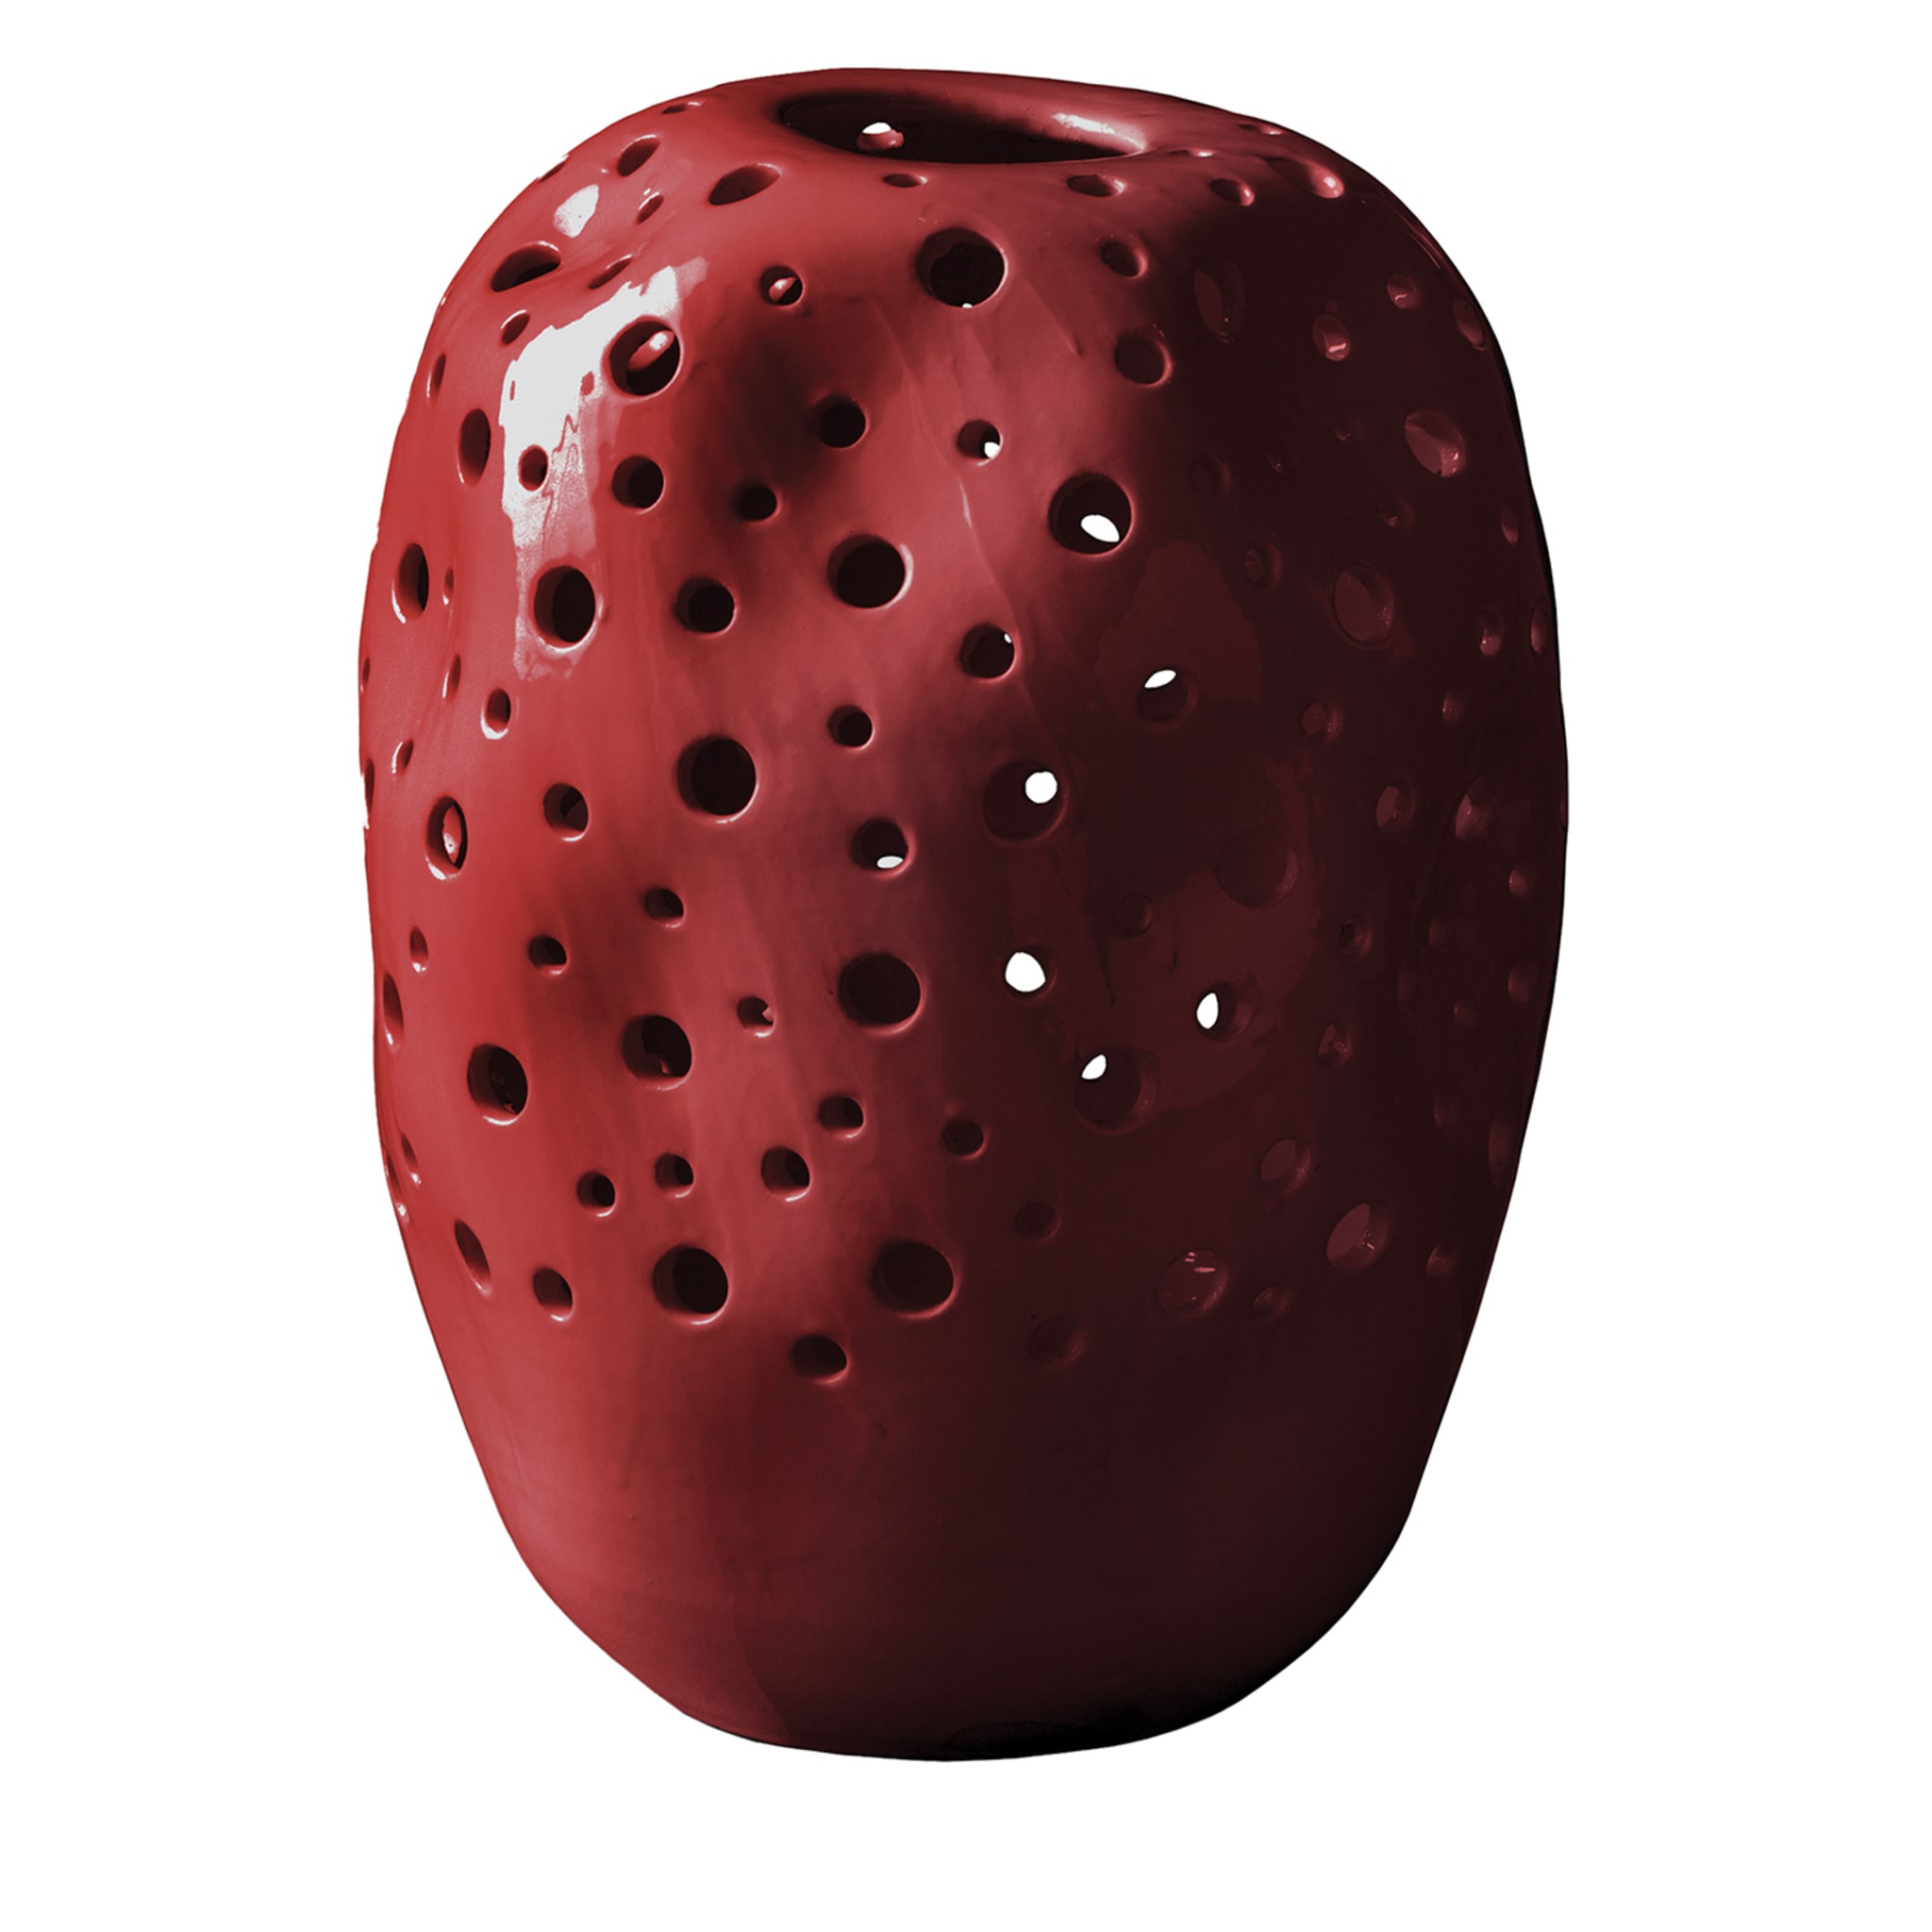 PortoCervo Corbezzolo Burgundische Vase von Letizia Piani - Hauptansicht